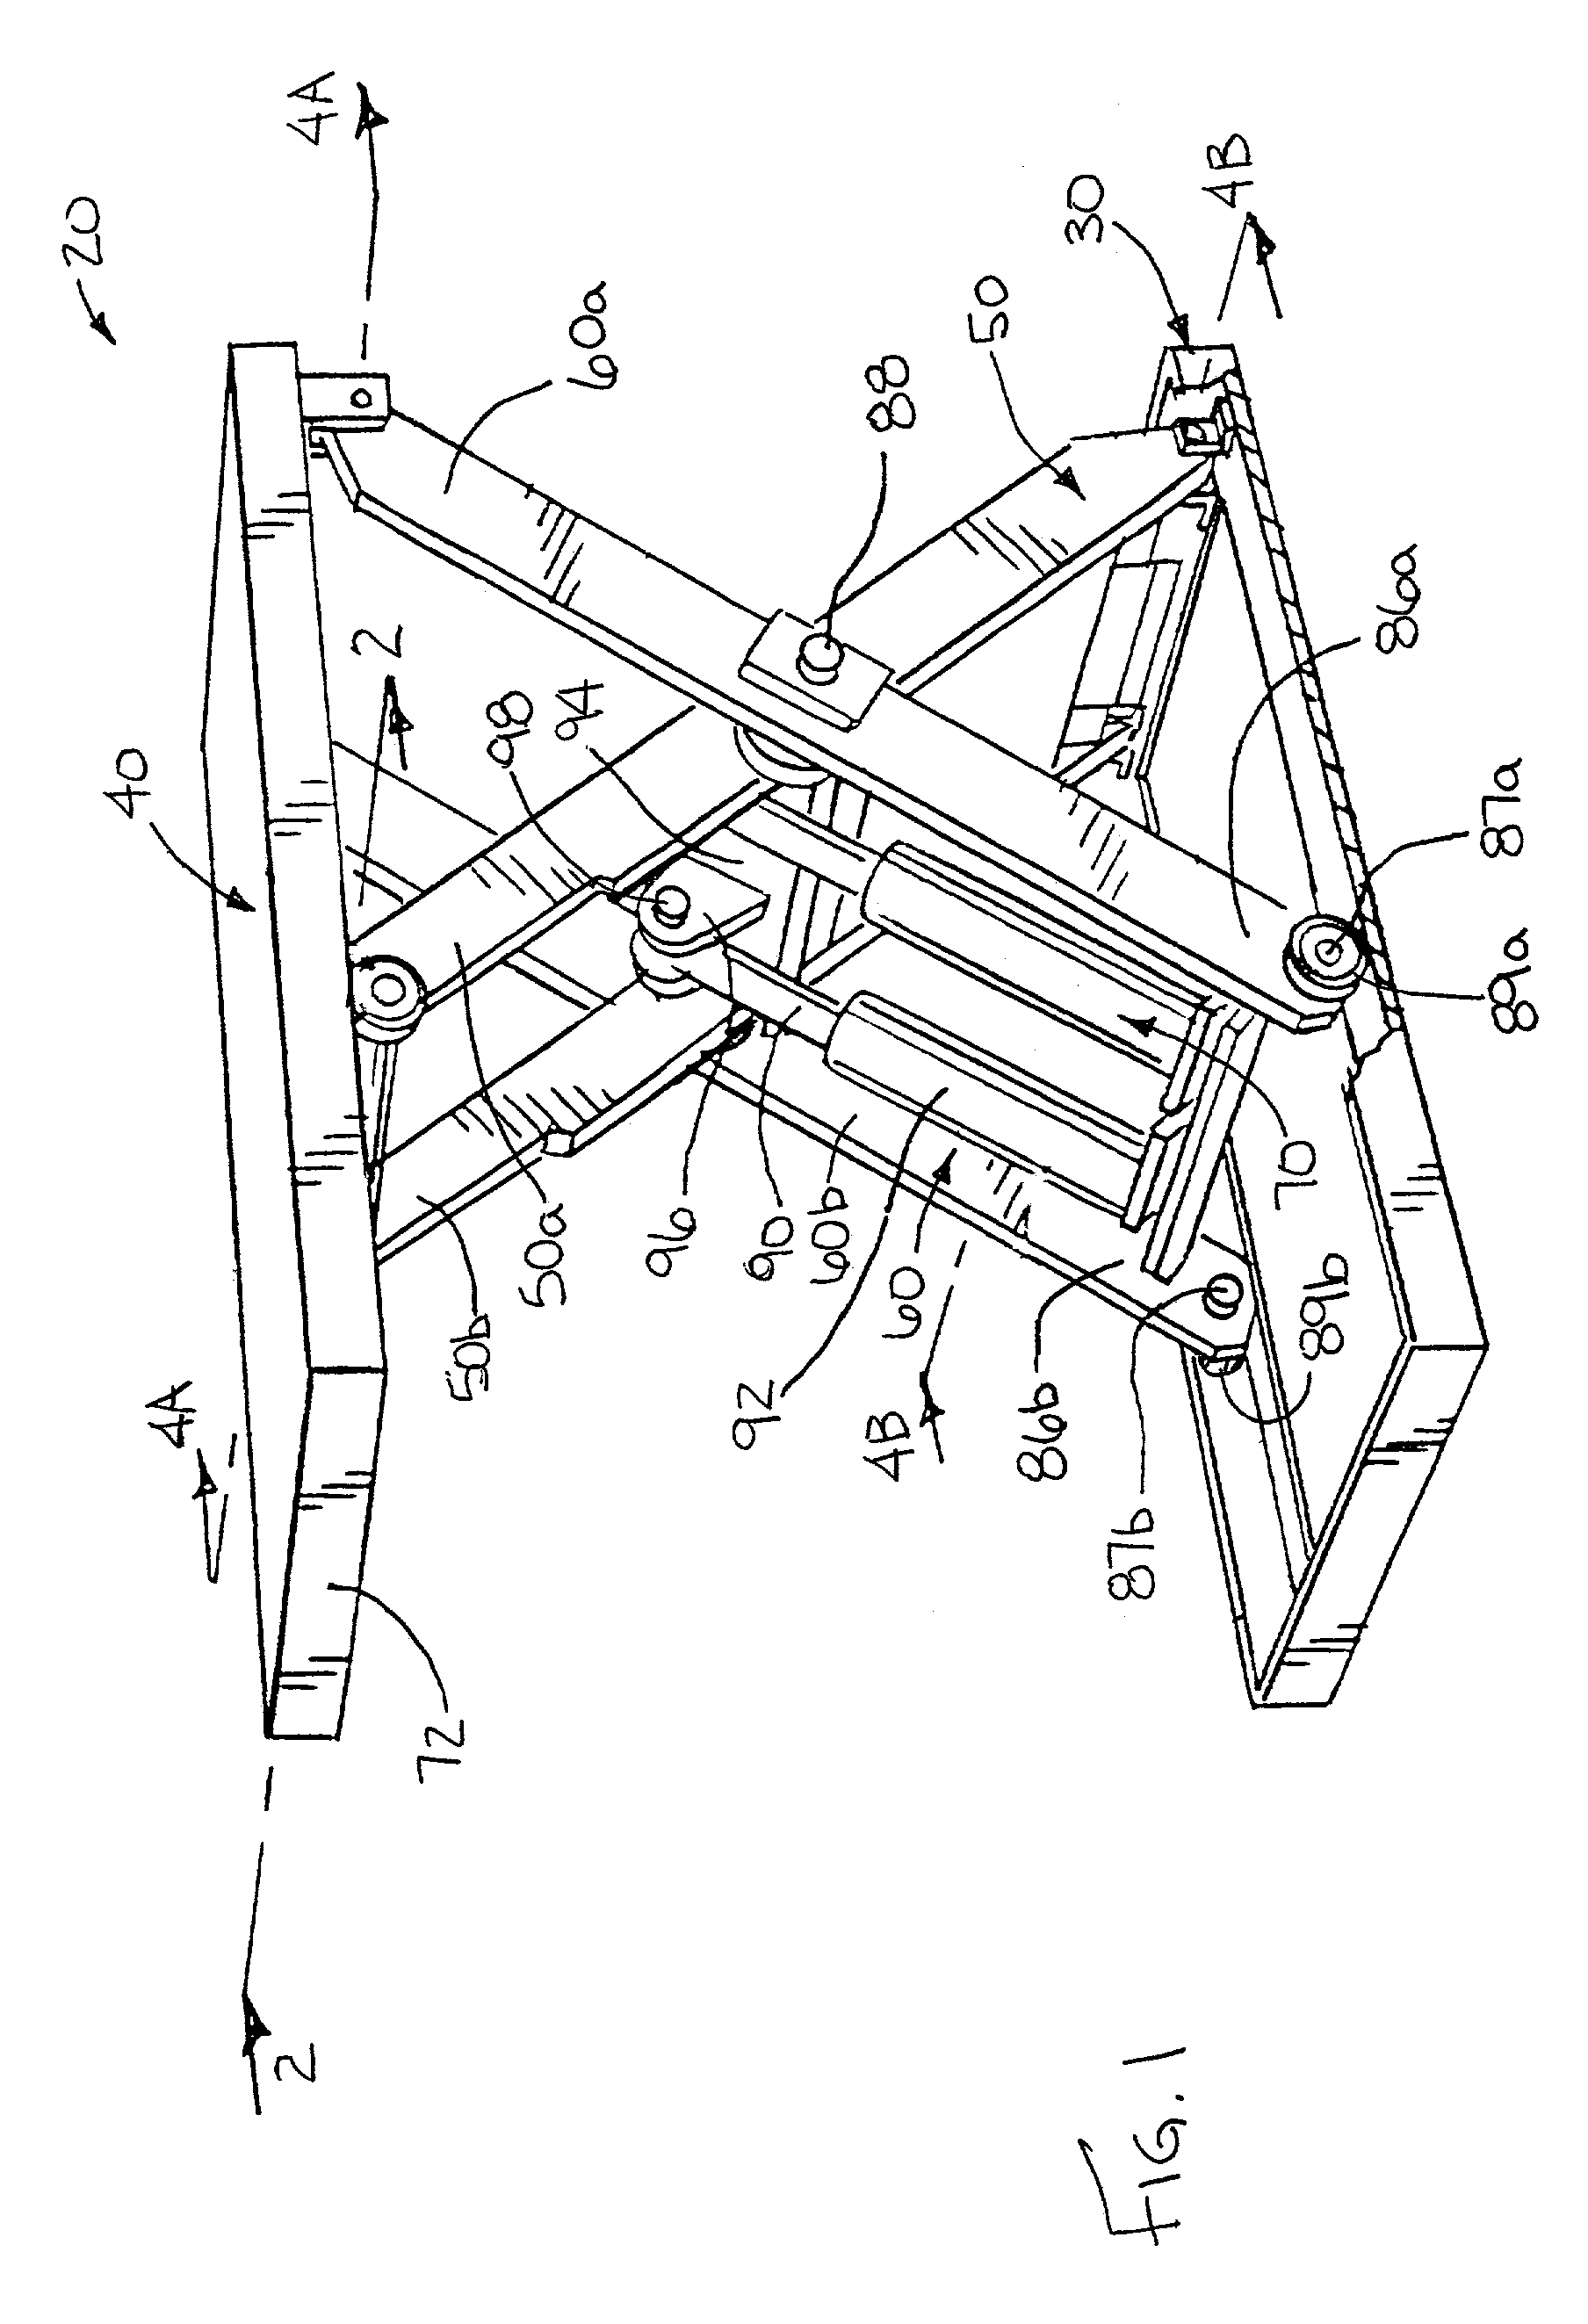 Platform centering device